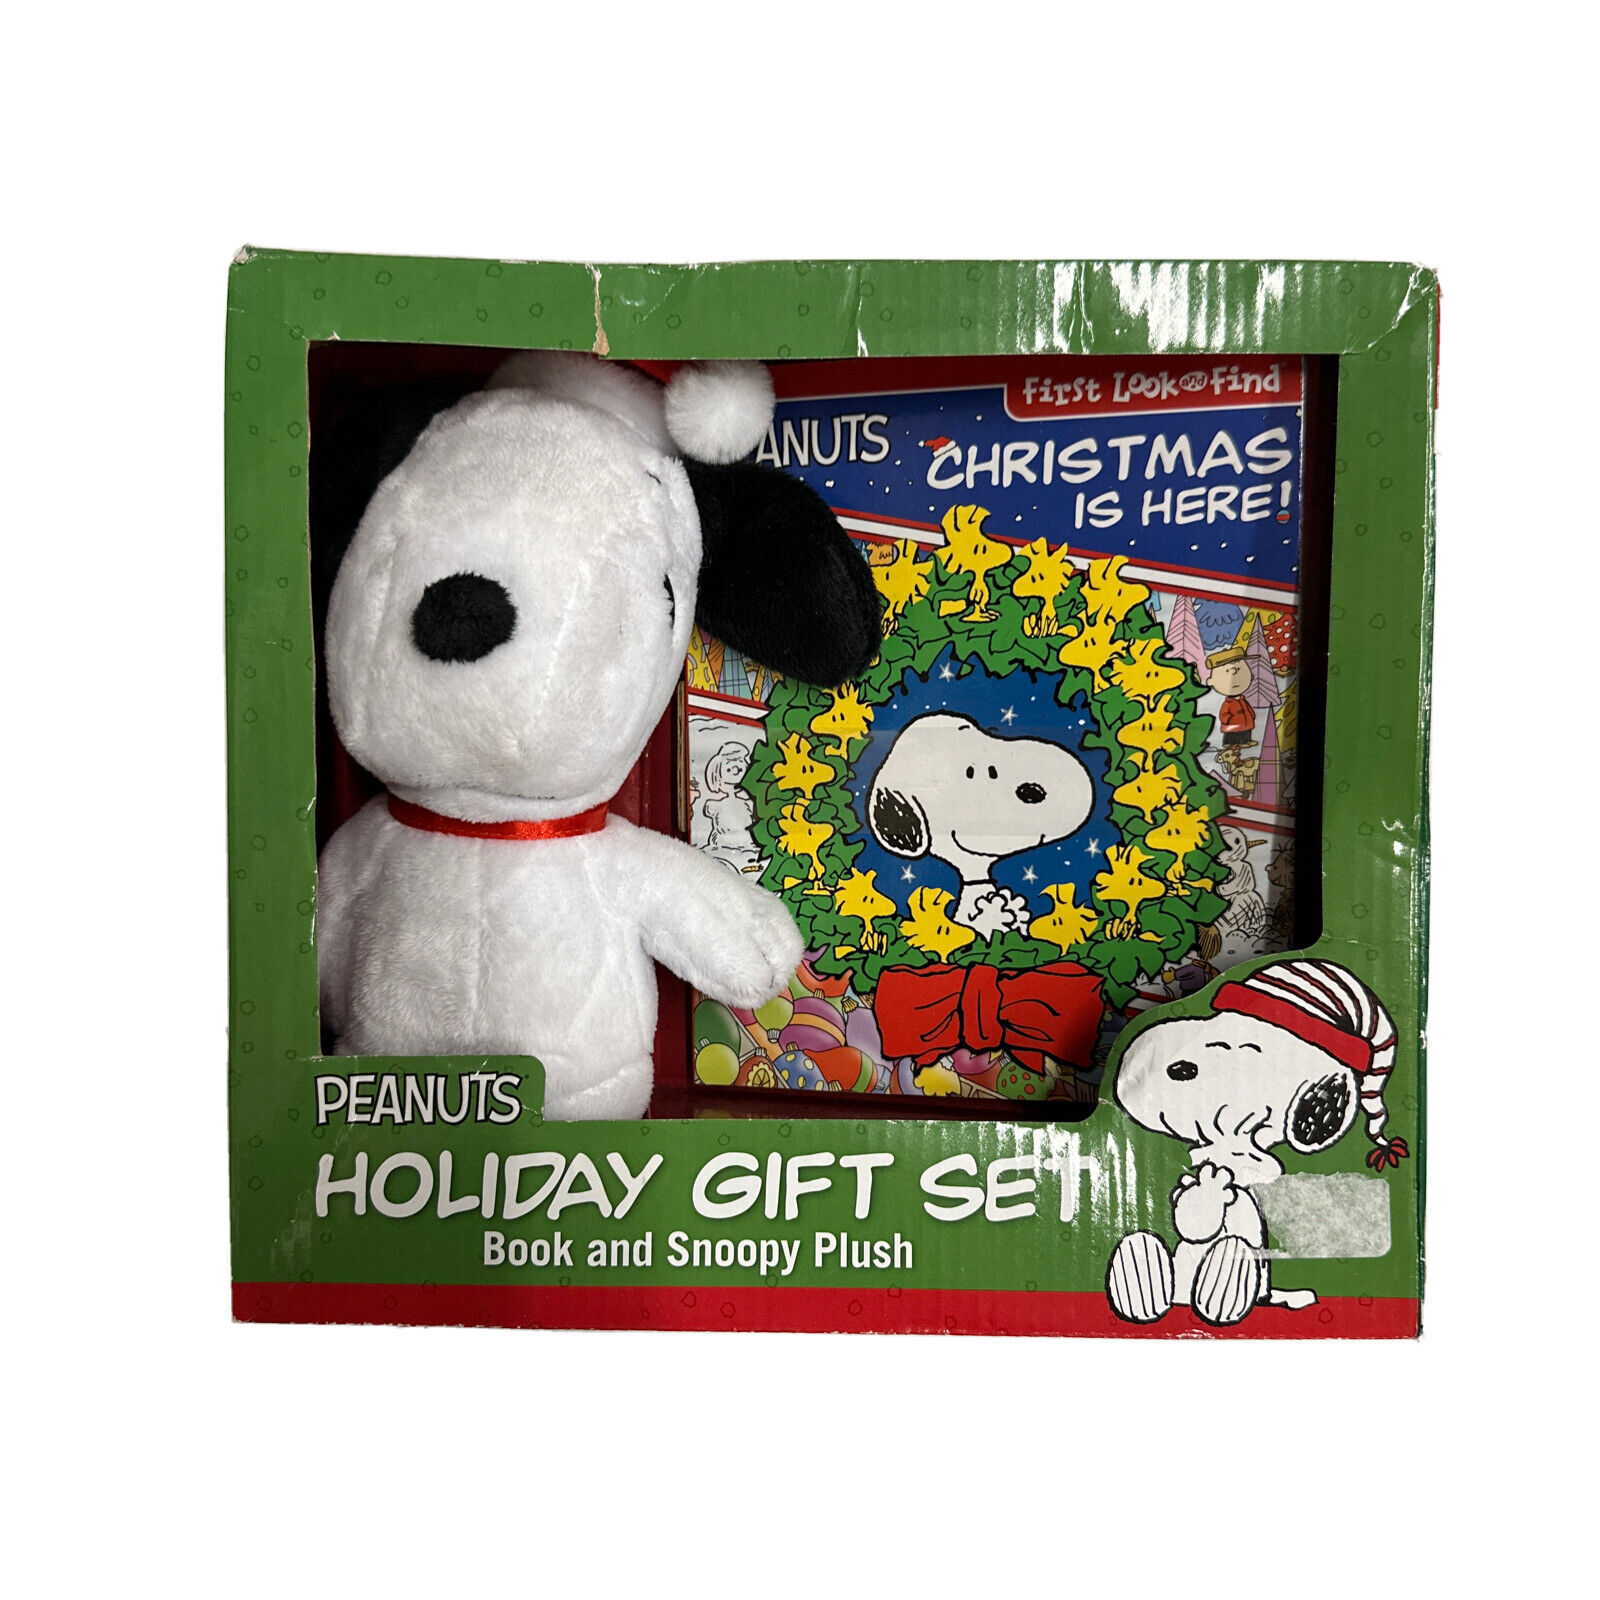 Peanuts Christmas Holiday Gift Set Plush Snoopy with book NEW-Box distress Pics